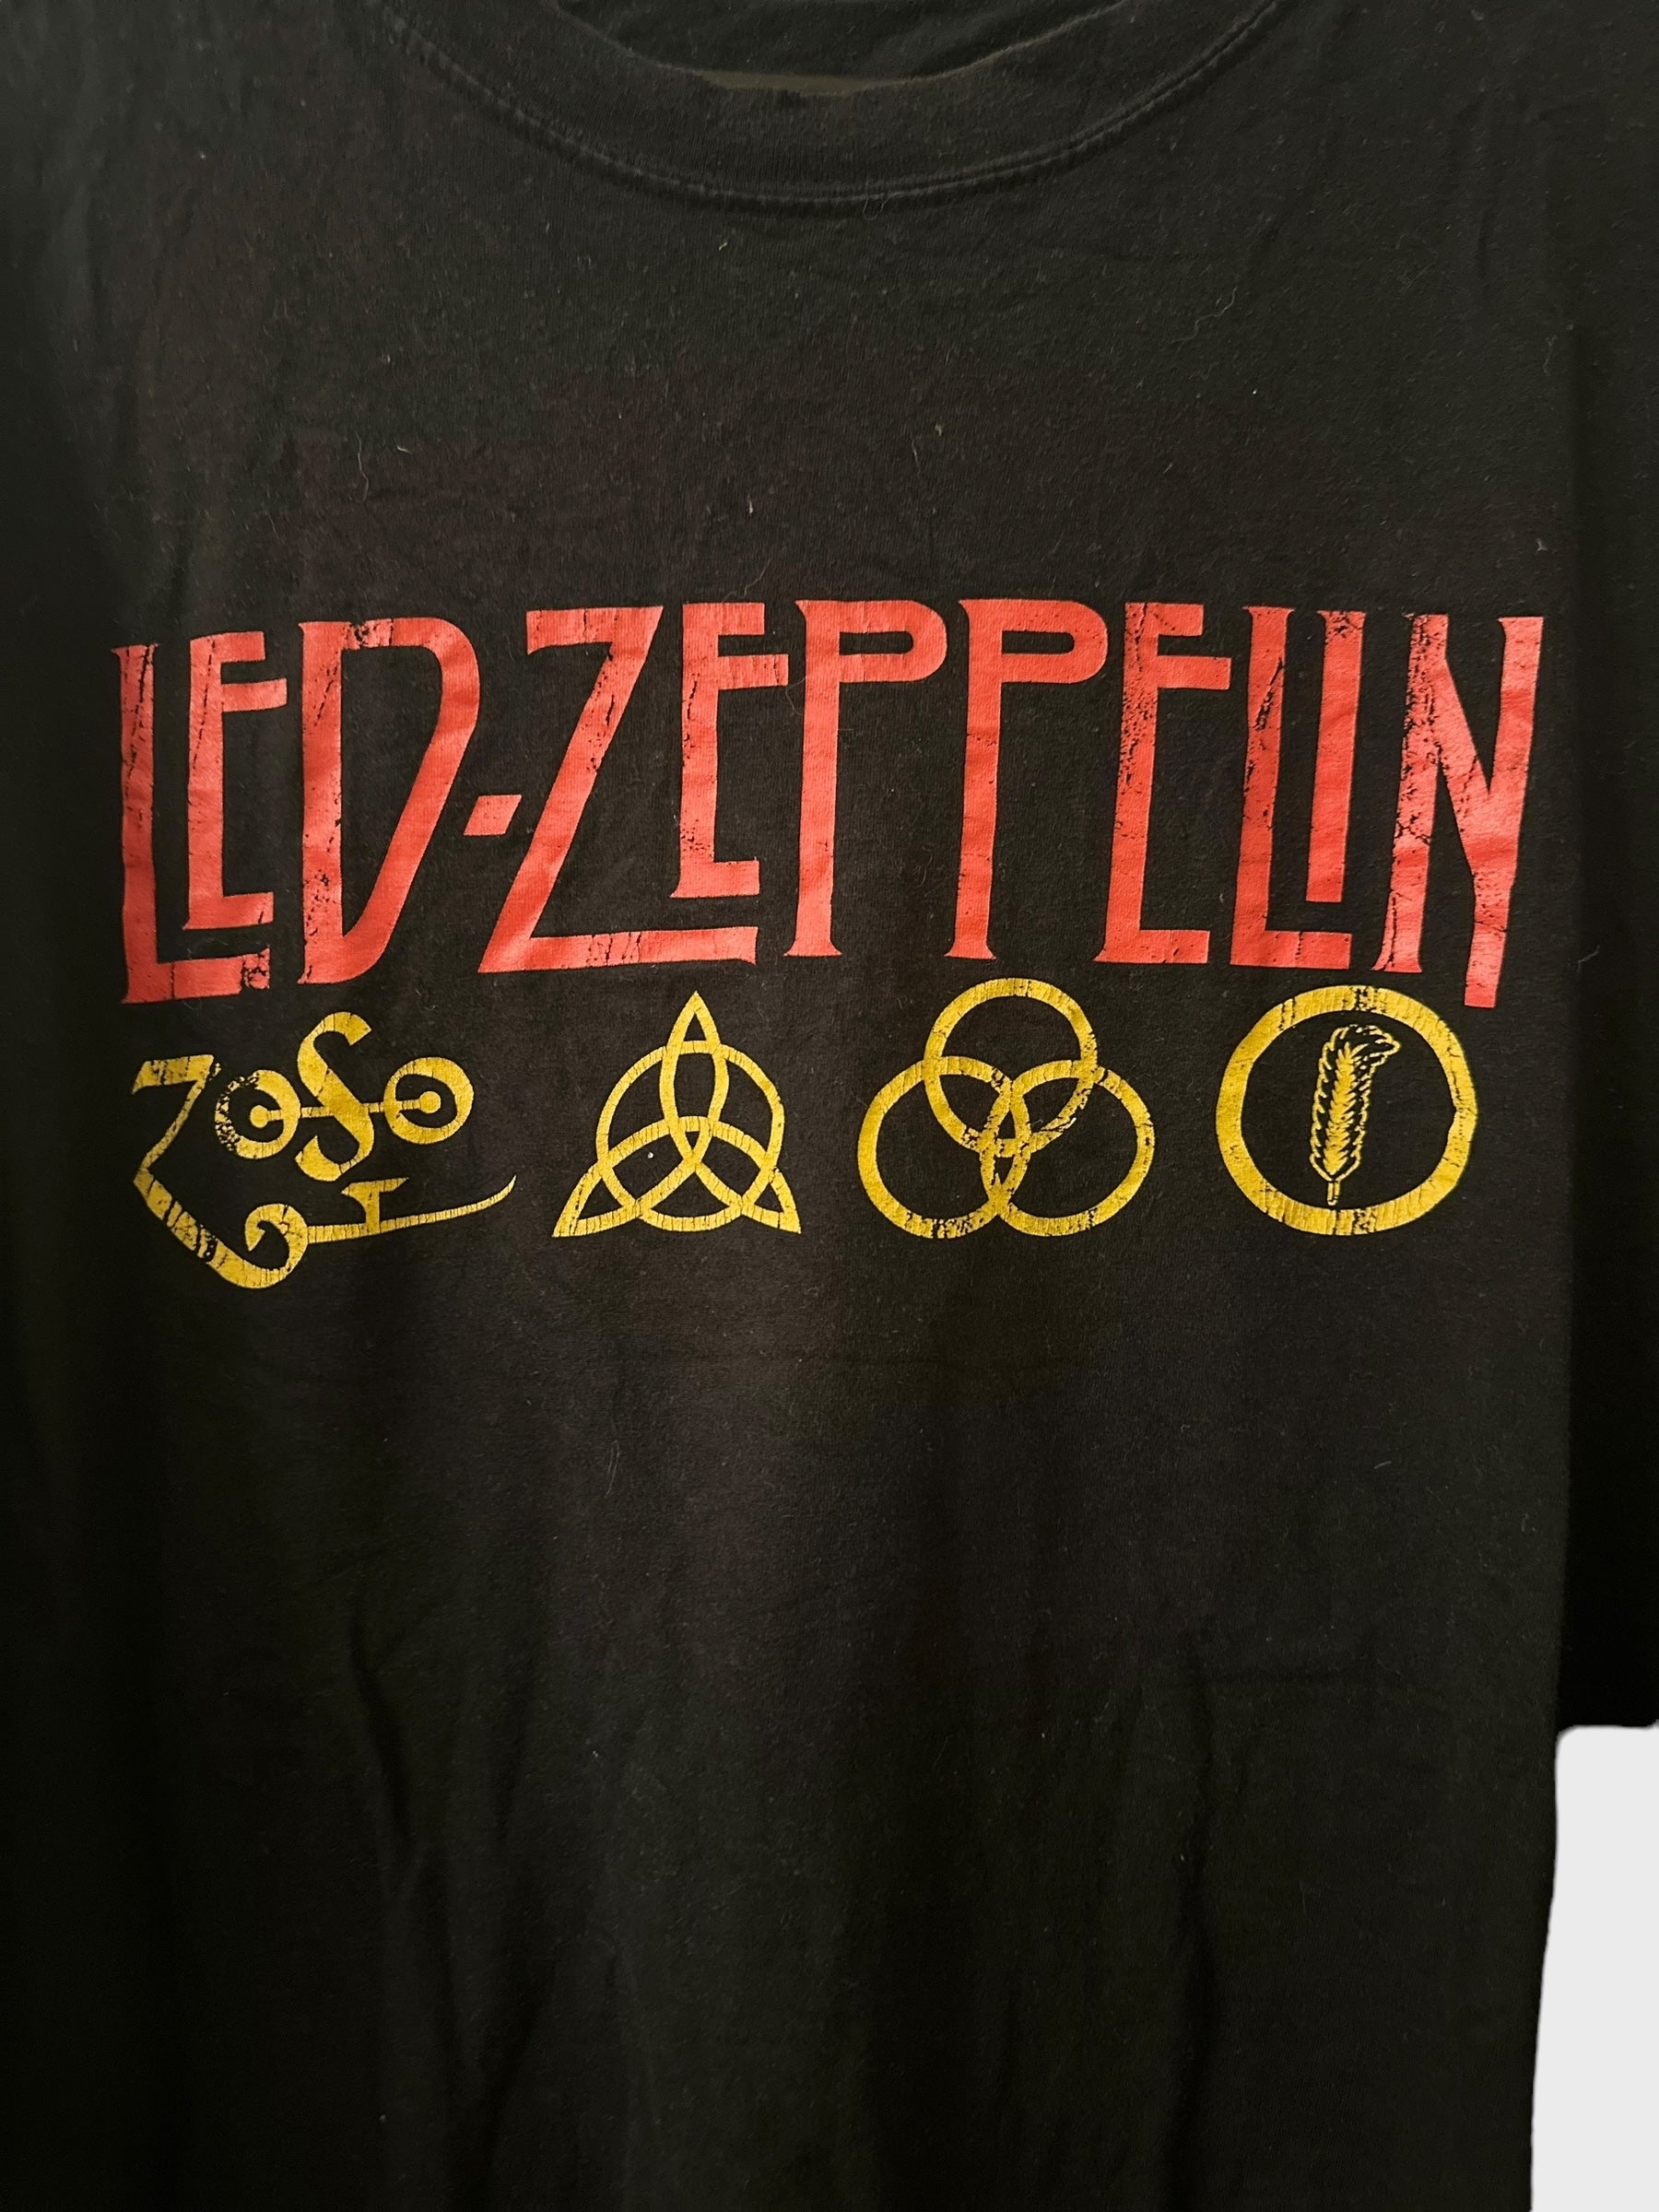 Led Zeppelin long sleeve T-shirt